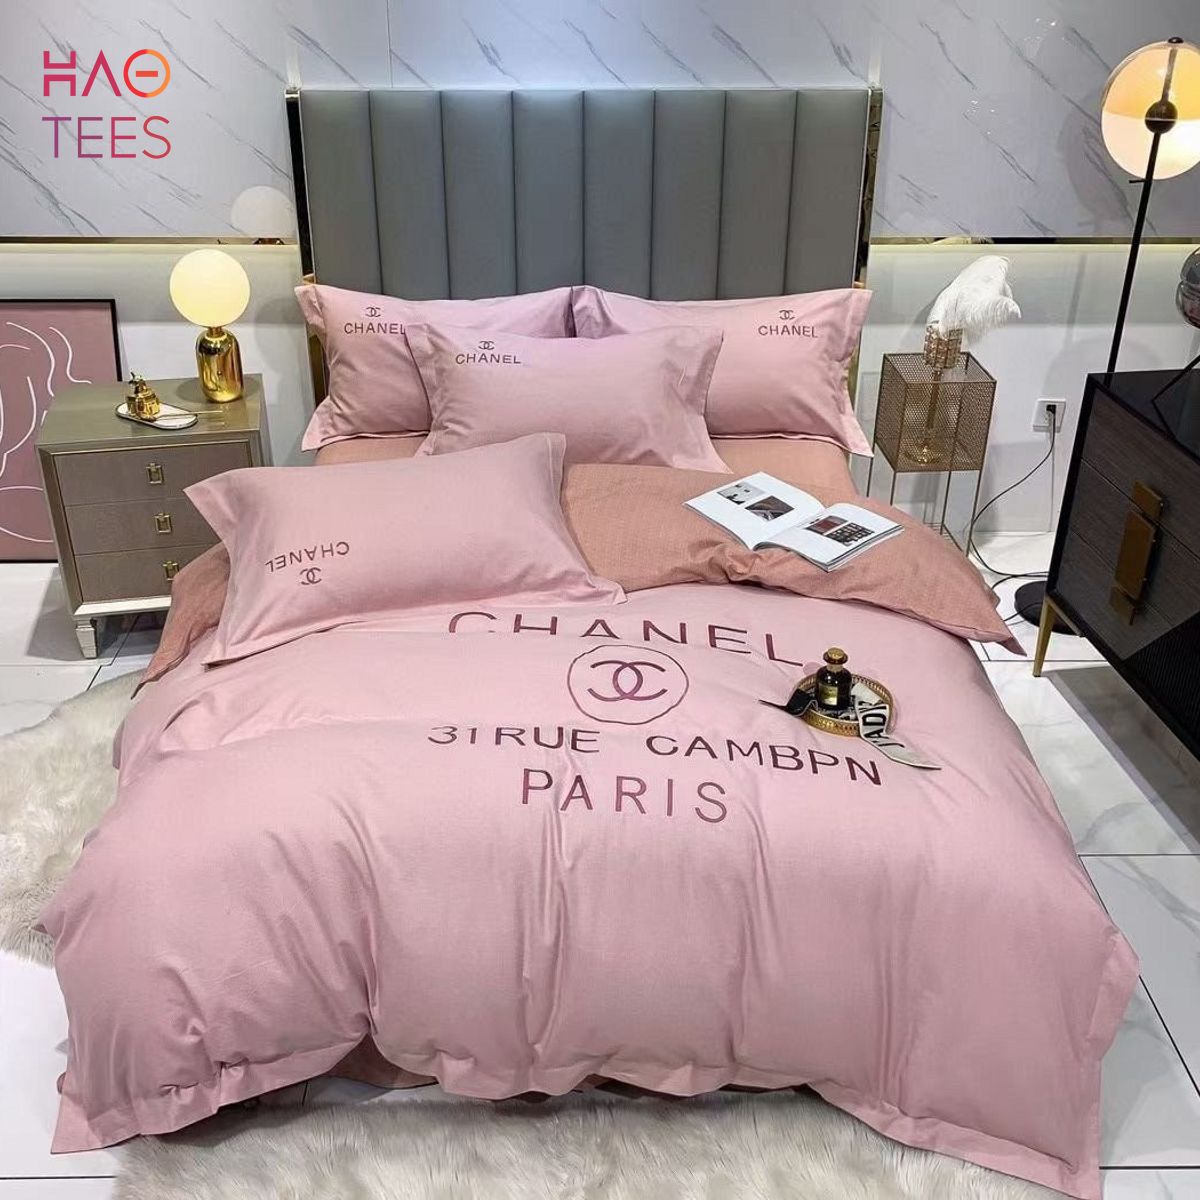 Buy Luxury Chanel Brands 1 Bedding Set Bed Sets